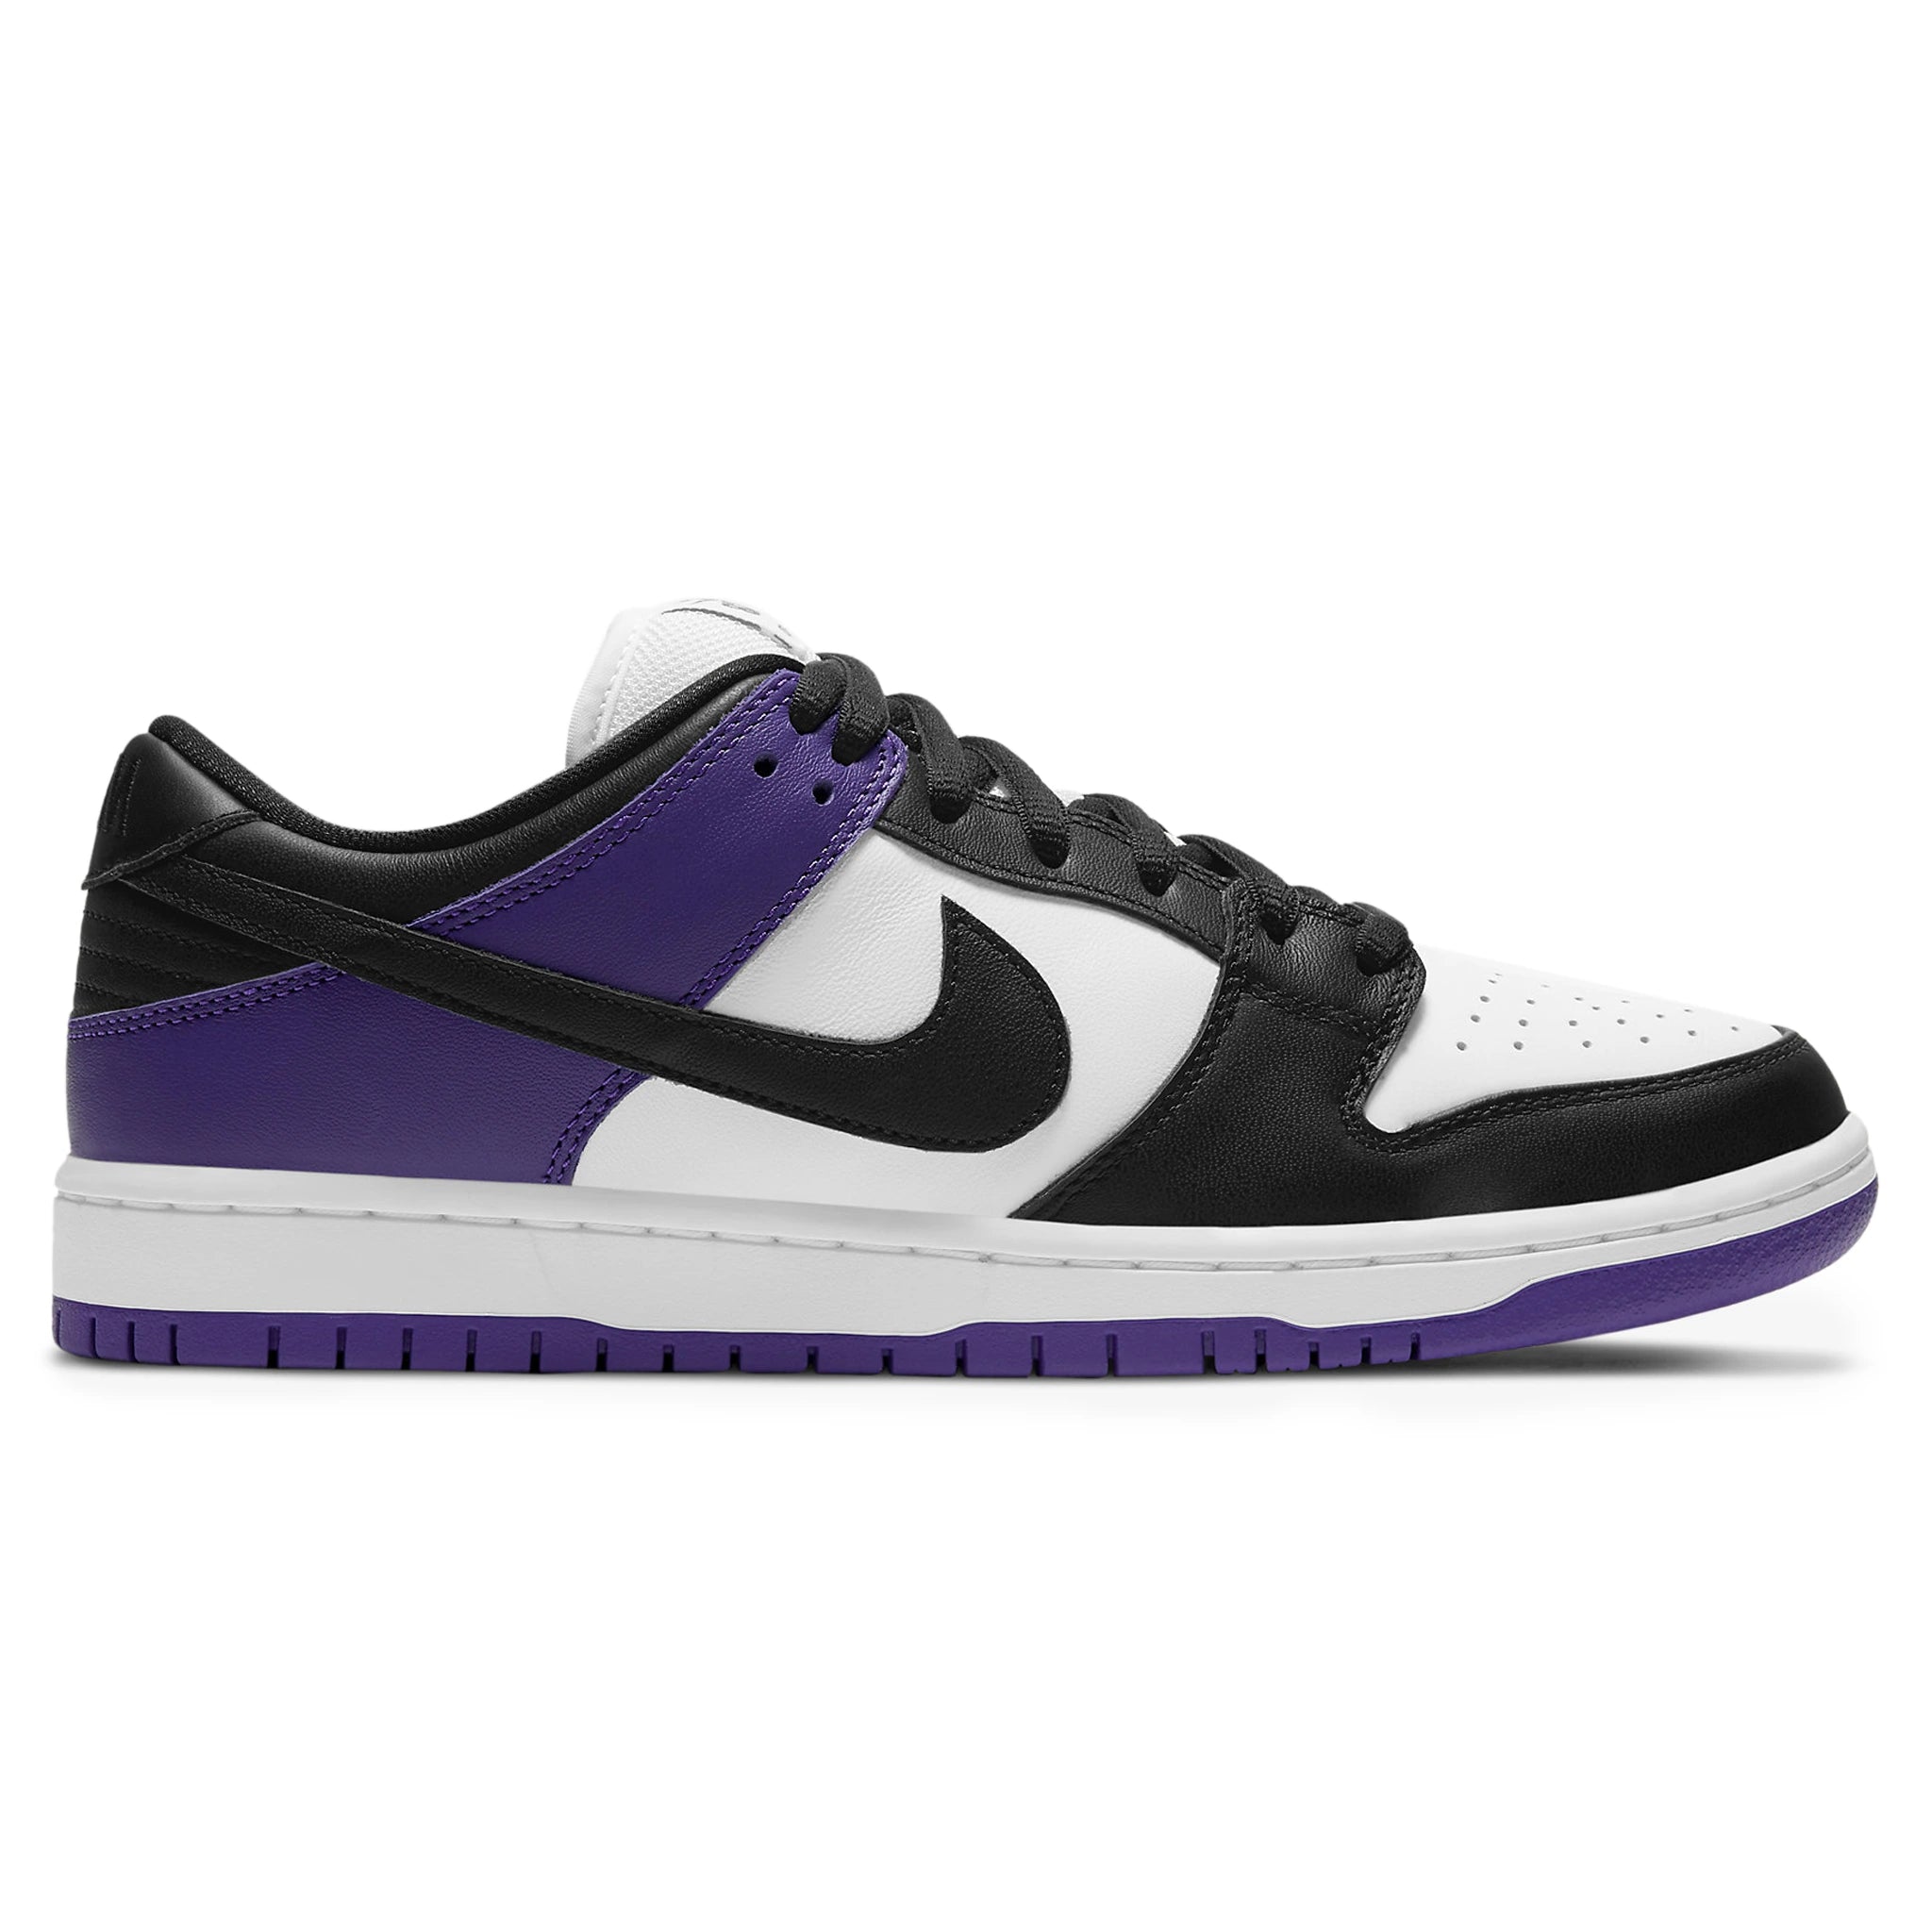 Side view of Nike SB Dunk Low Court Purple BQ6817-500